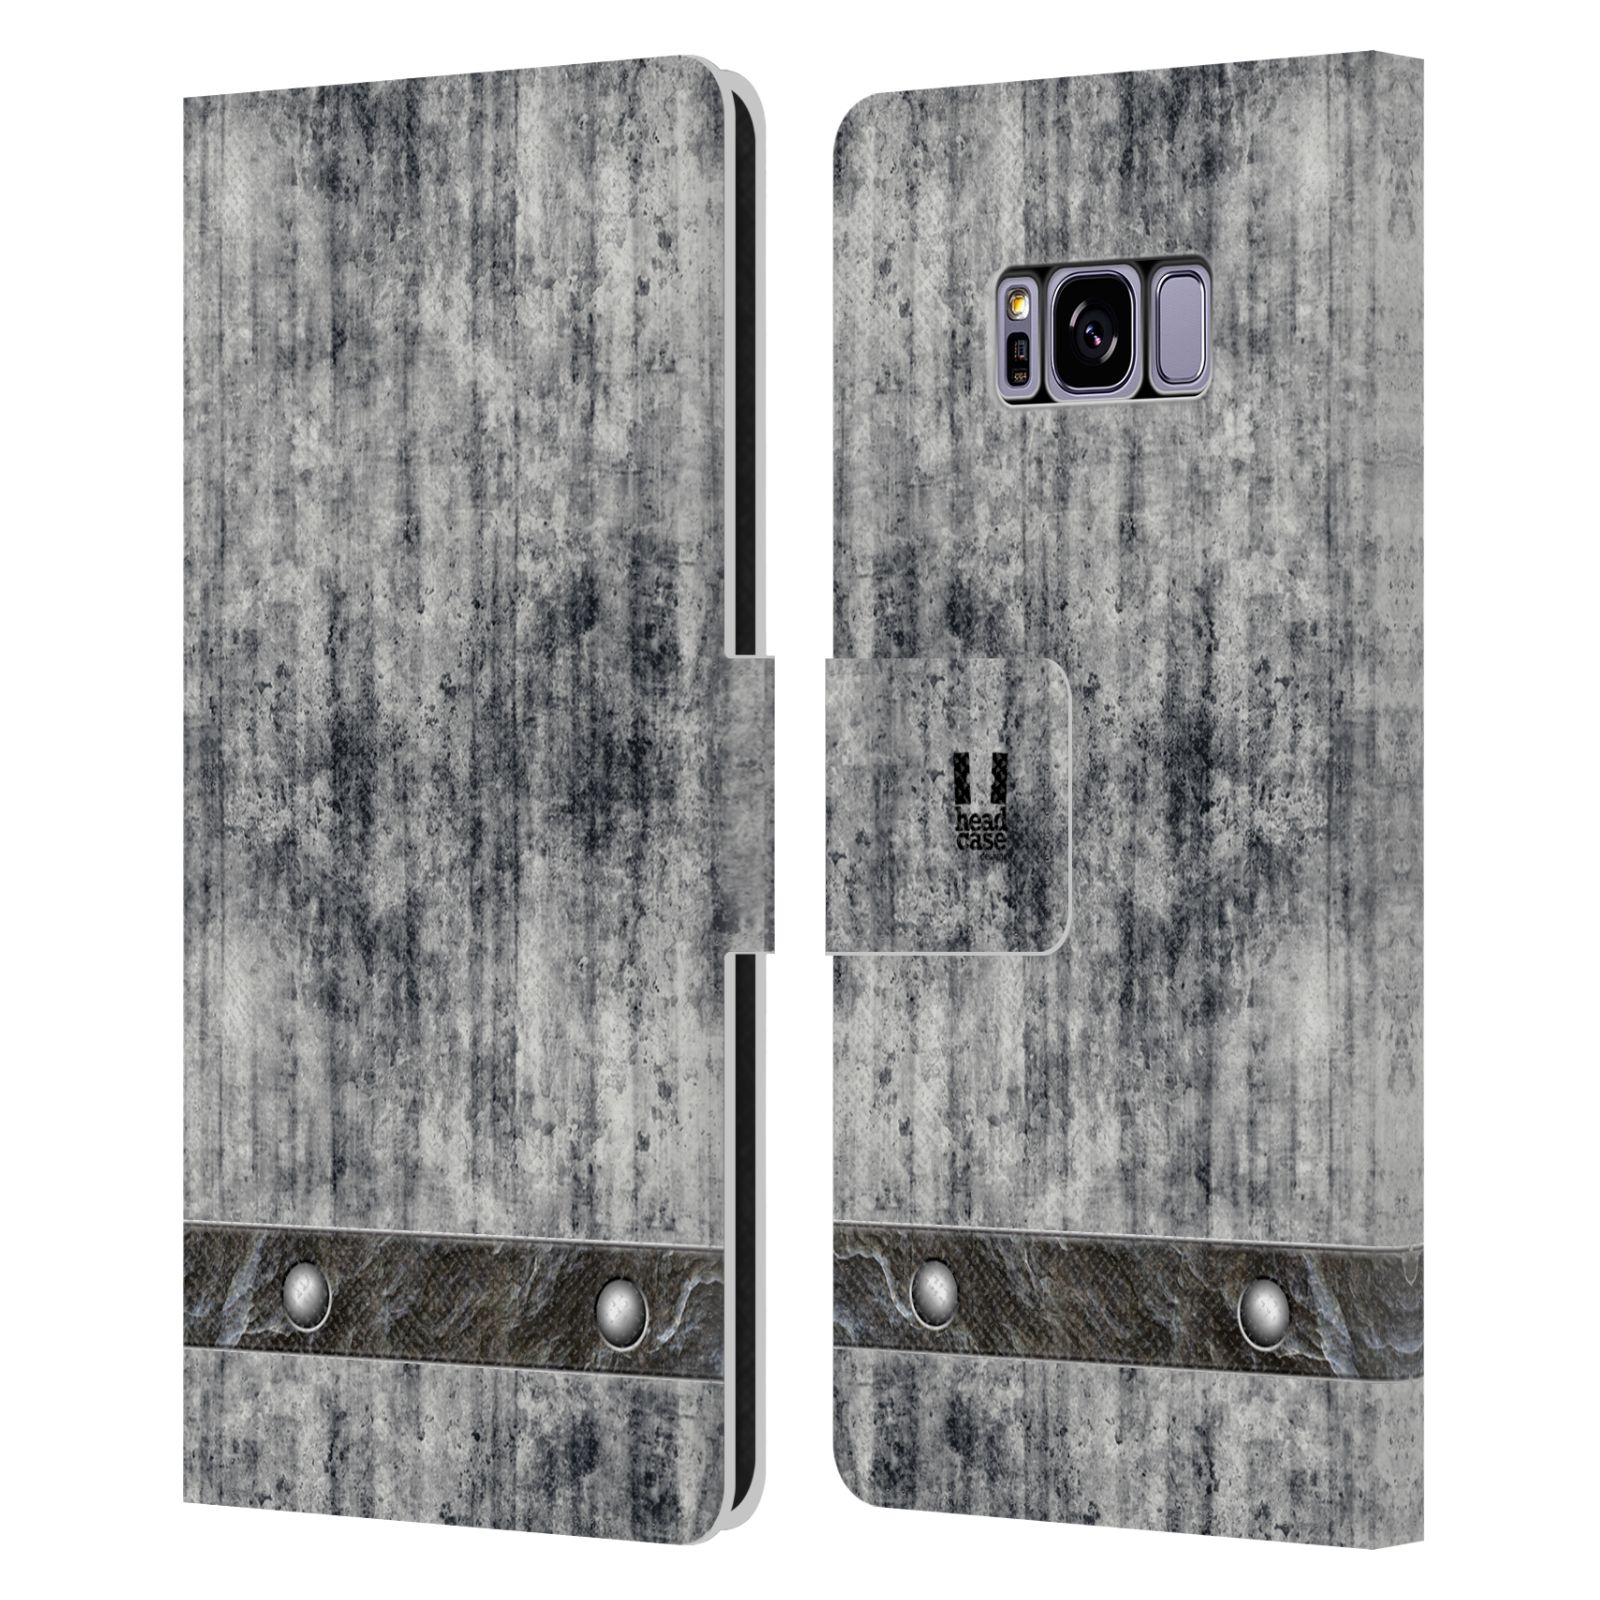 Pouzdro pro mobil Samsung Galaxy S8 - Stavební textura šedý beton